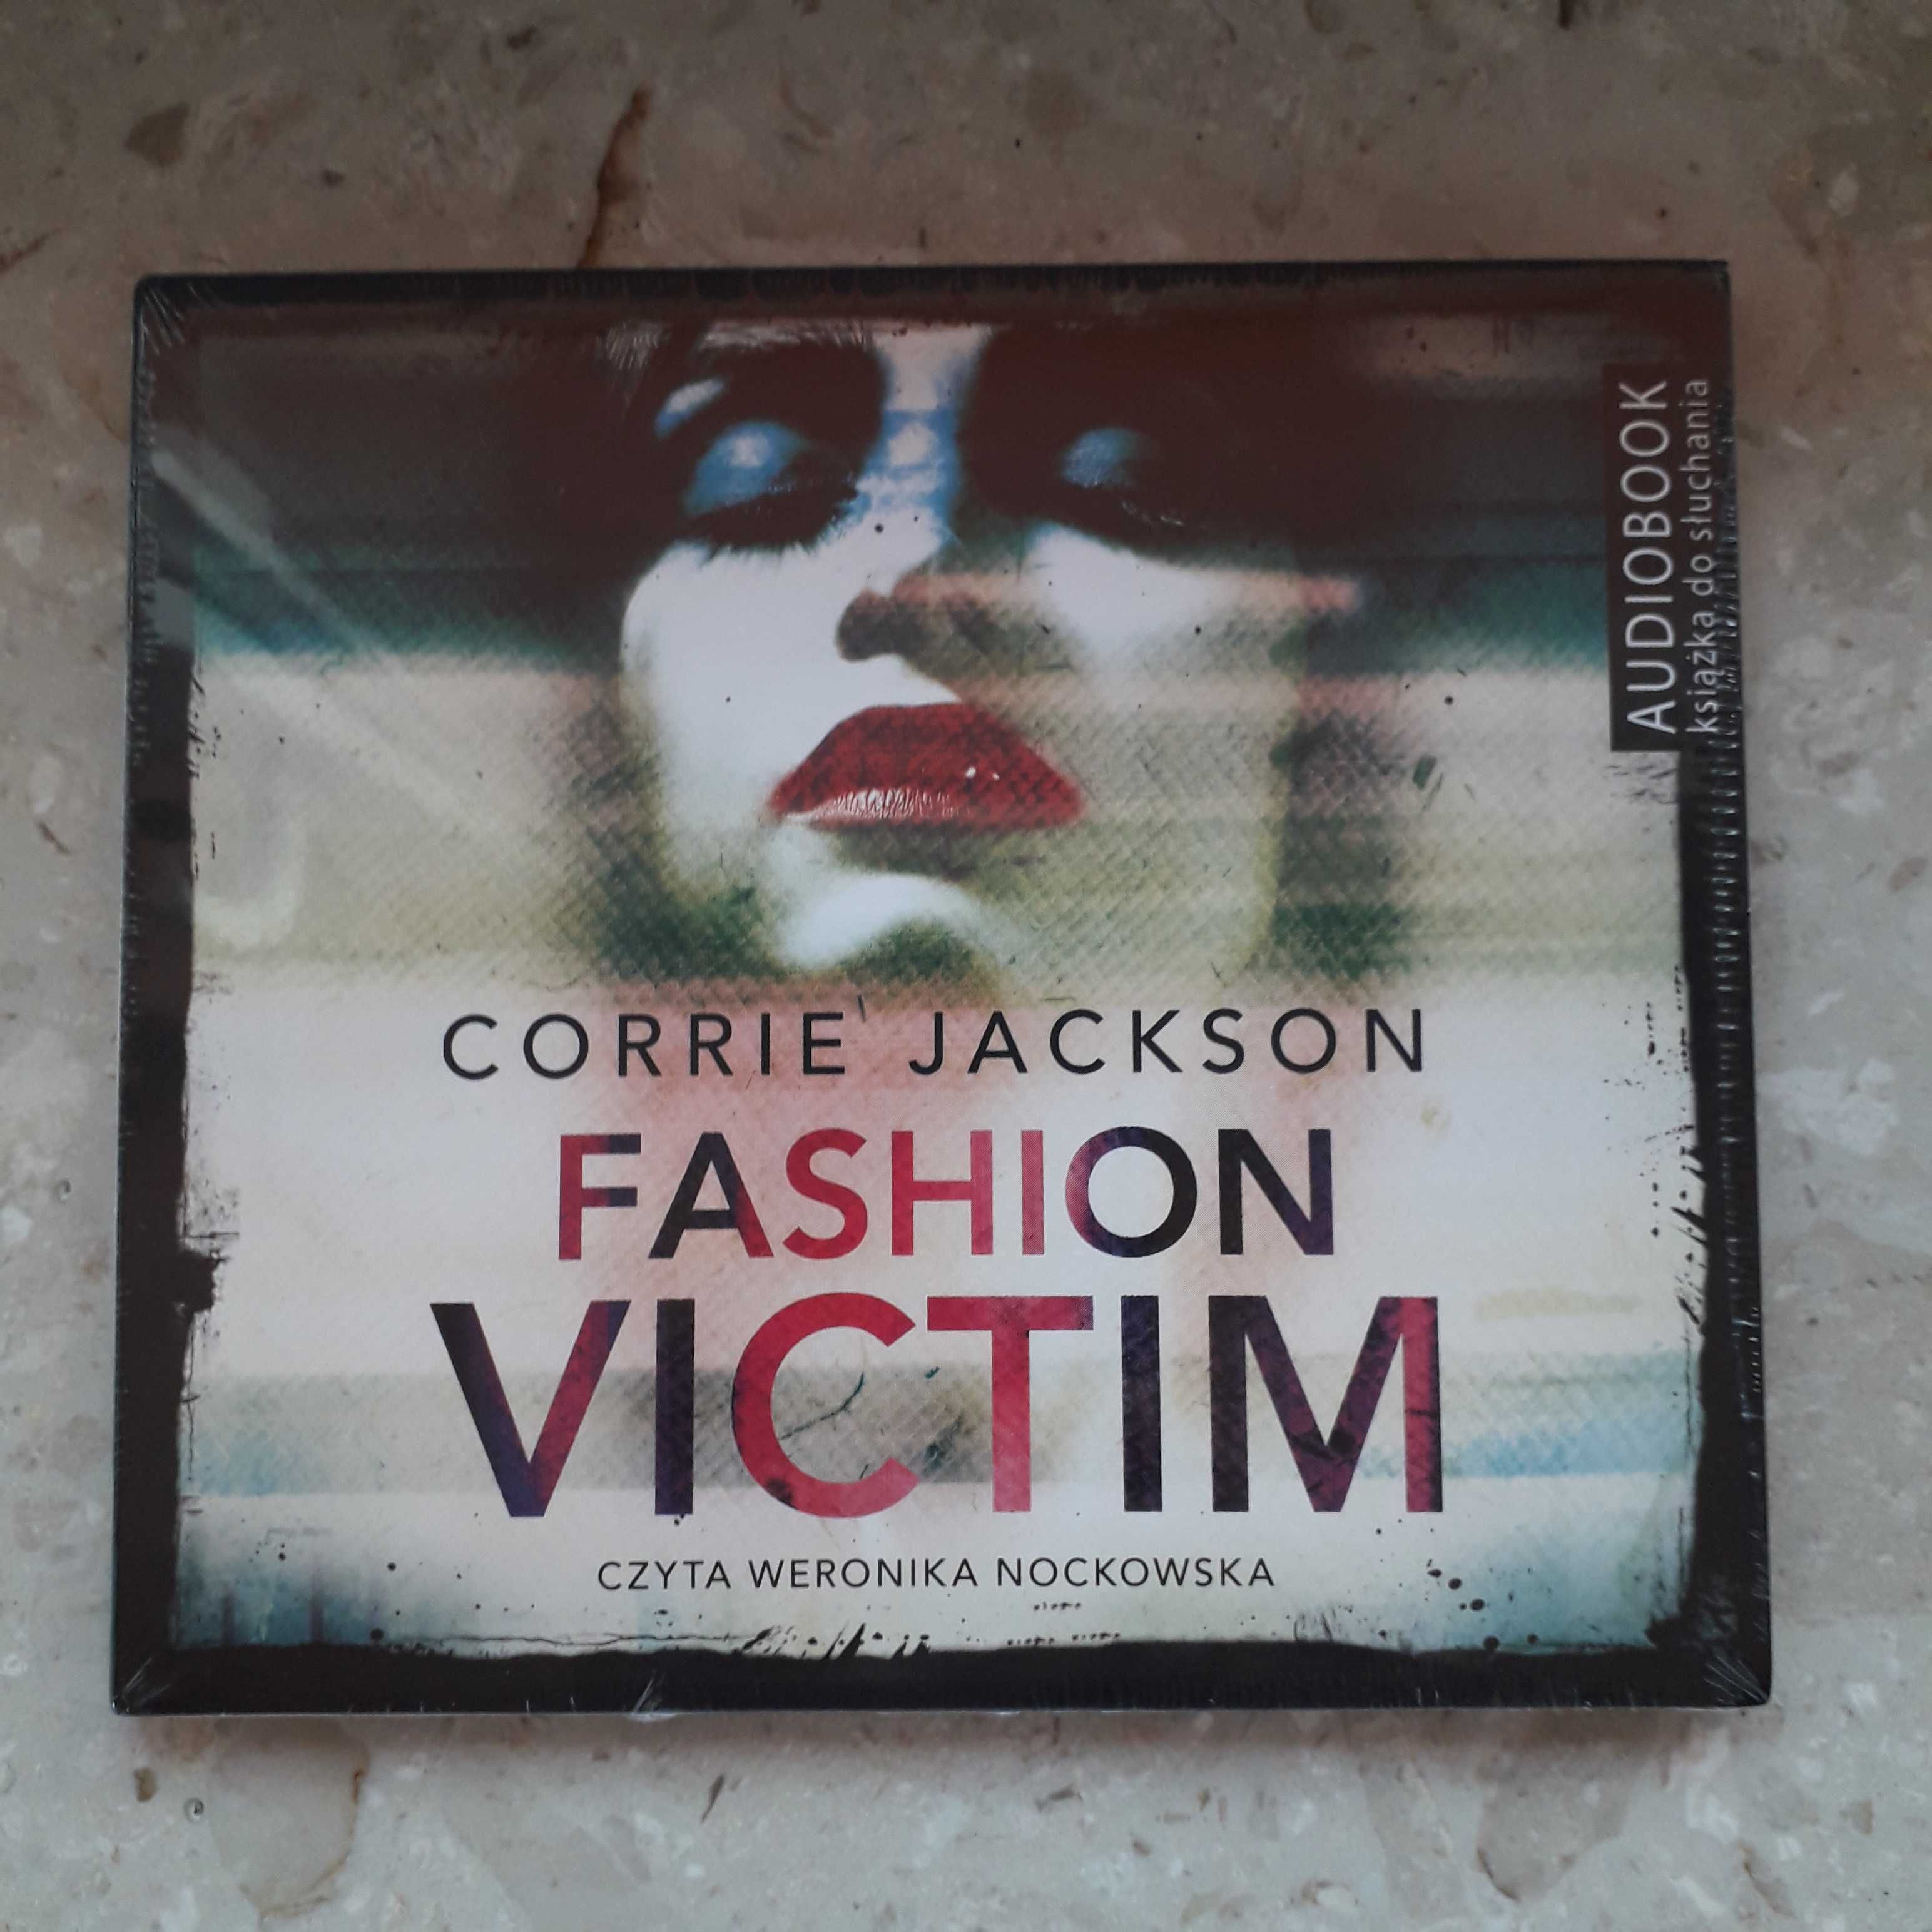 Fashion victim - audiobook CD - Corrie Jackson